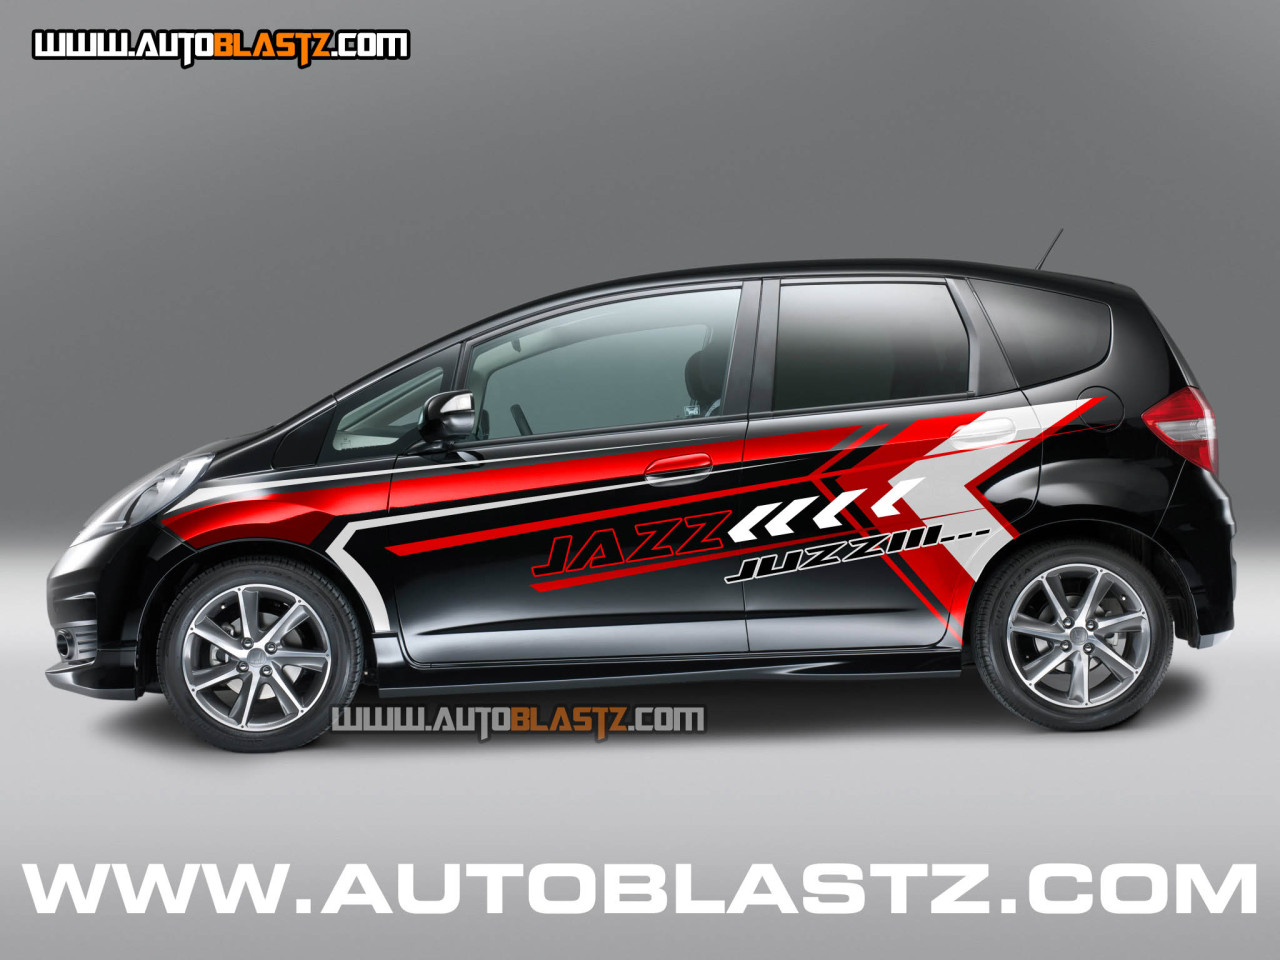 Top Cutting  Sticker  Mobil  Honda Jazz  Hitam  Terbaru Modifotto